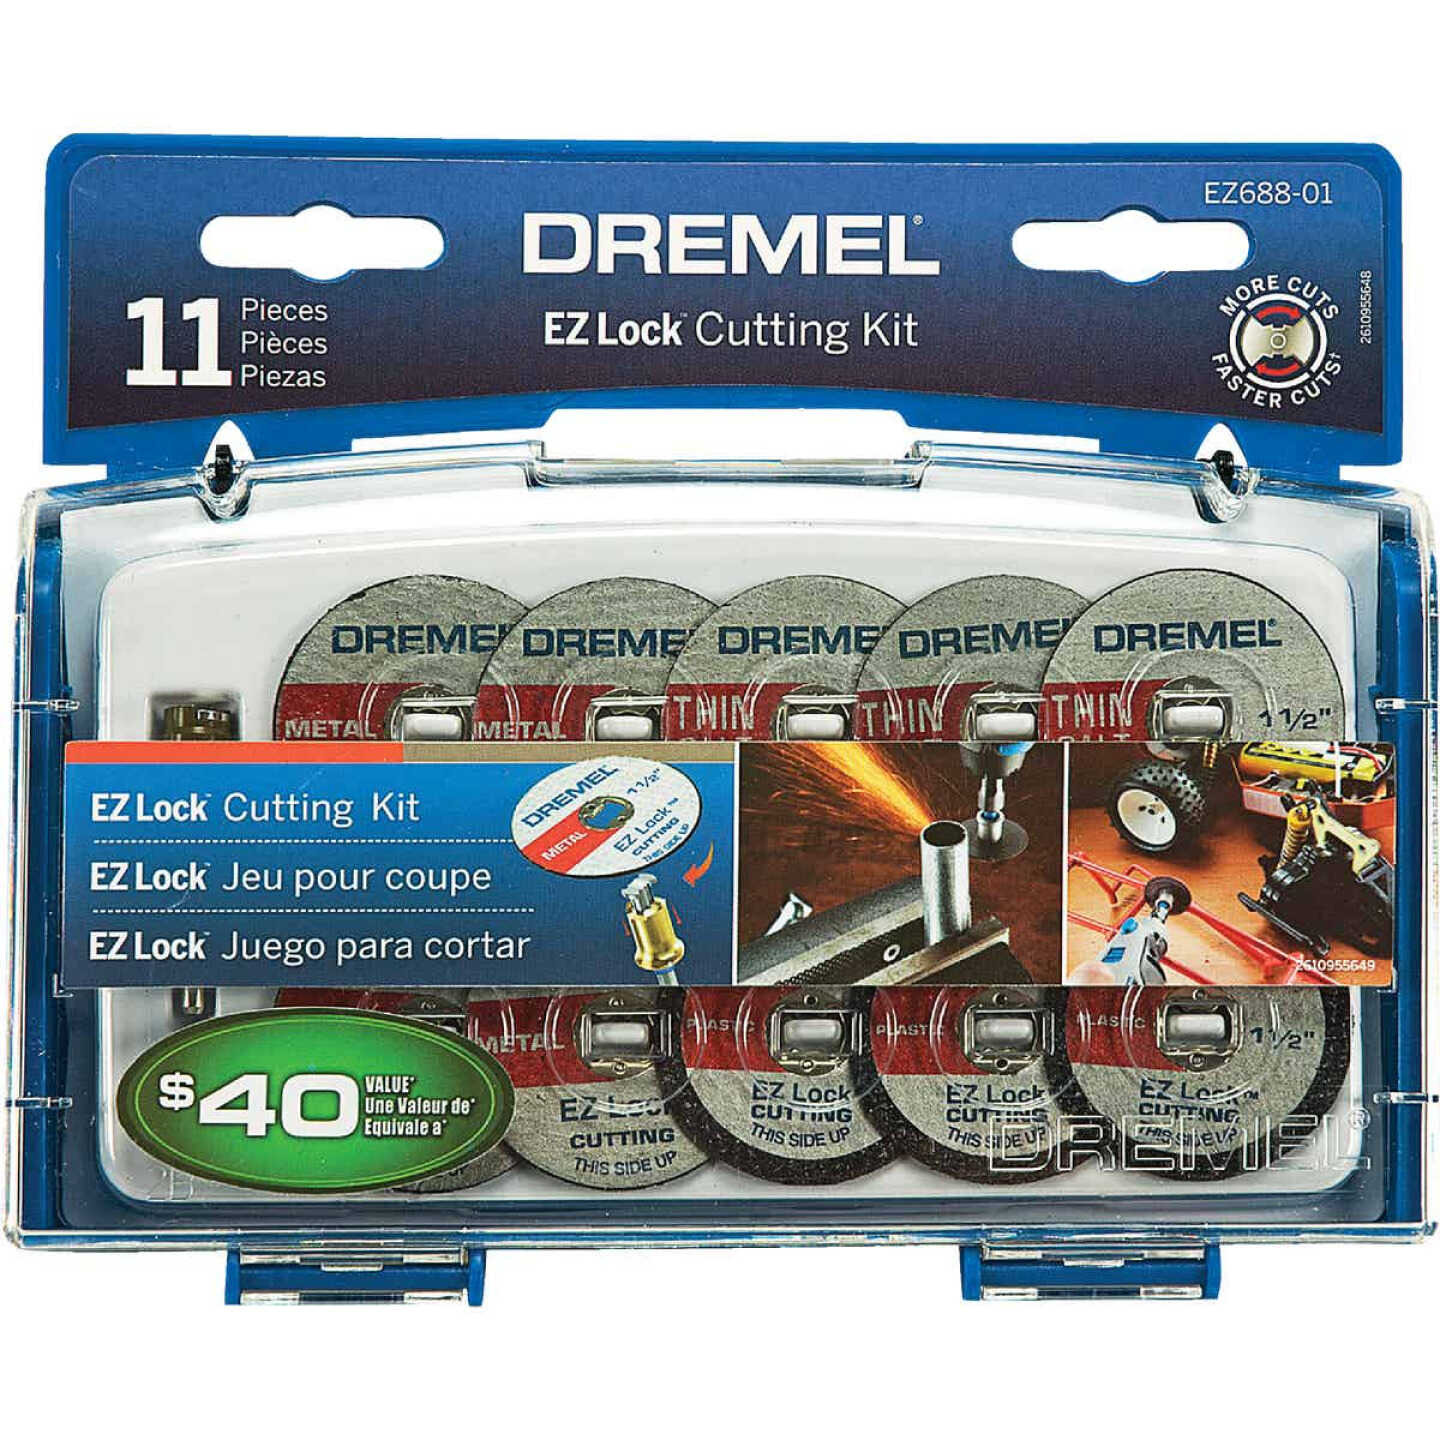 Dremel General Purpose Rotary Tool Accessory Kit (52-Piece